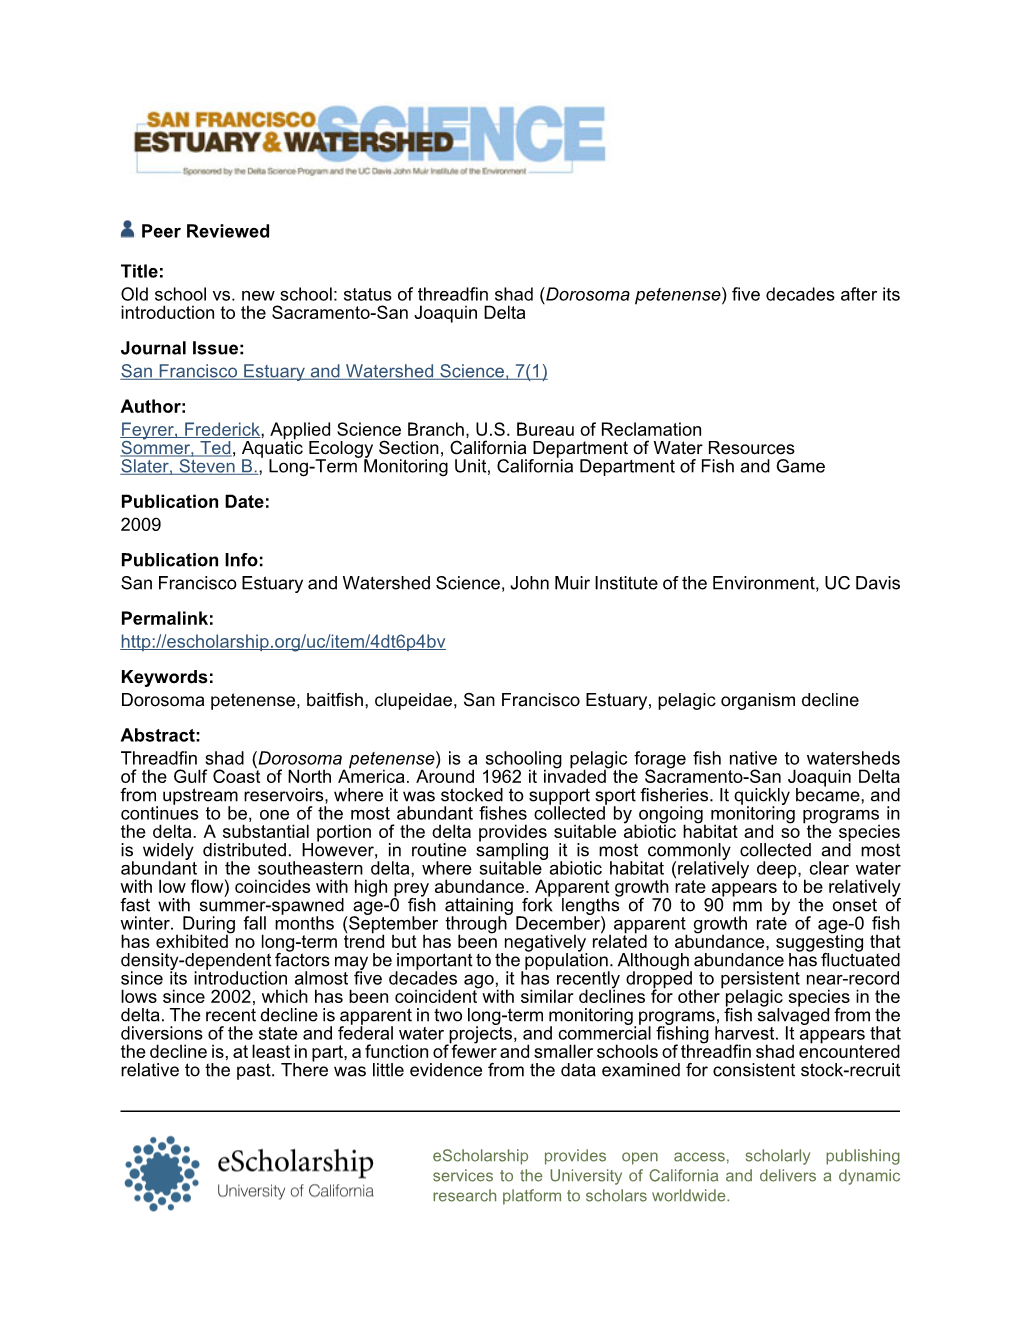 Status of Threadfin Shad (Dorosoma Petenense)